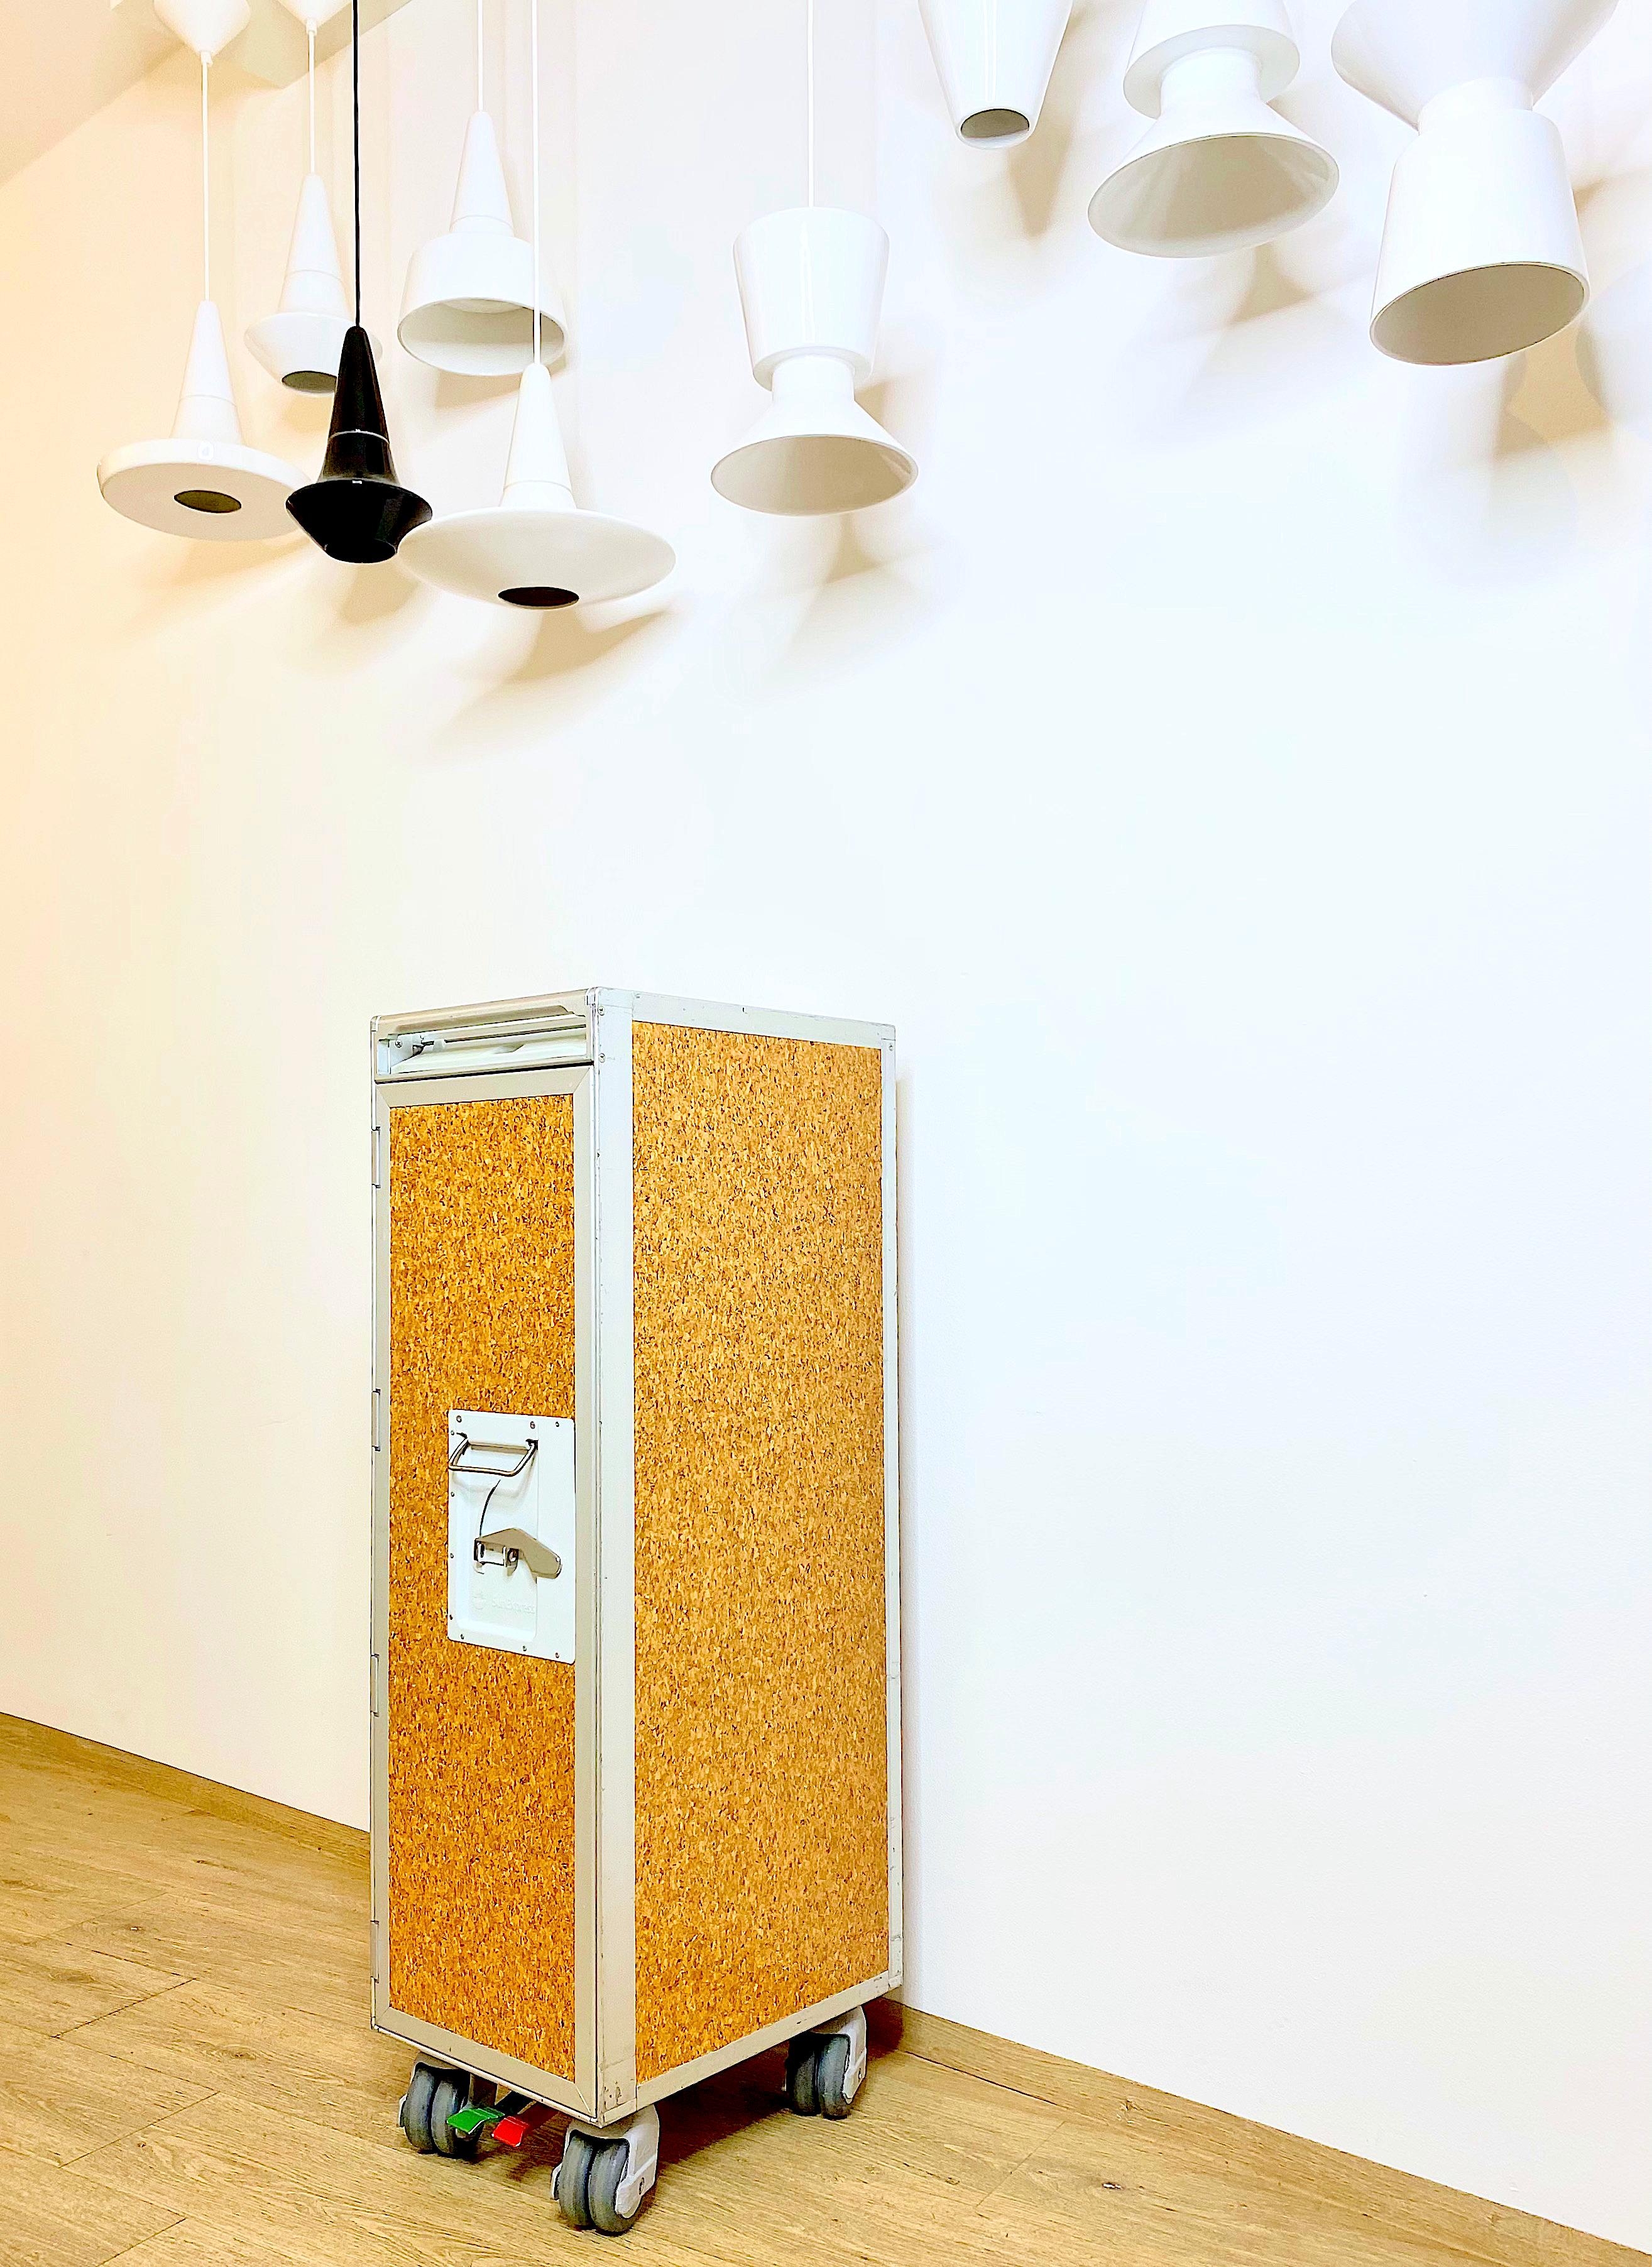 #möbel #flugzeugtrolley #beleuchtung #keramik #cork #upcycling #smartfurniture #minimal #neodesignstudios 